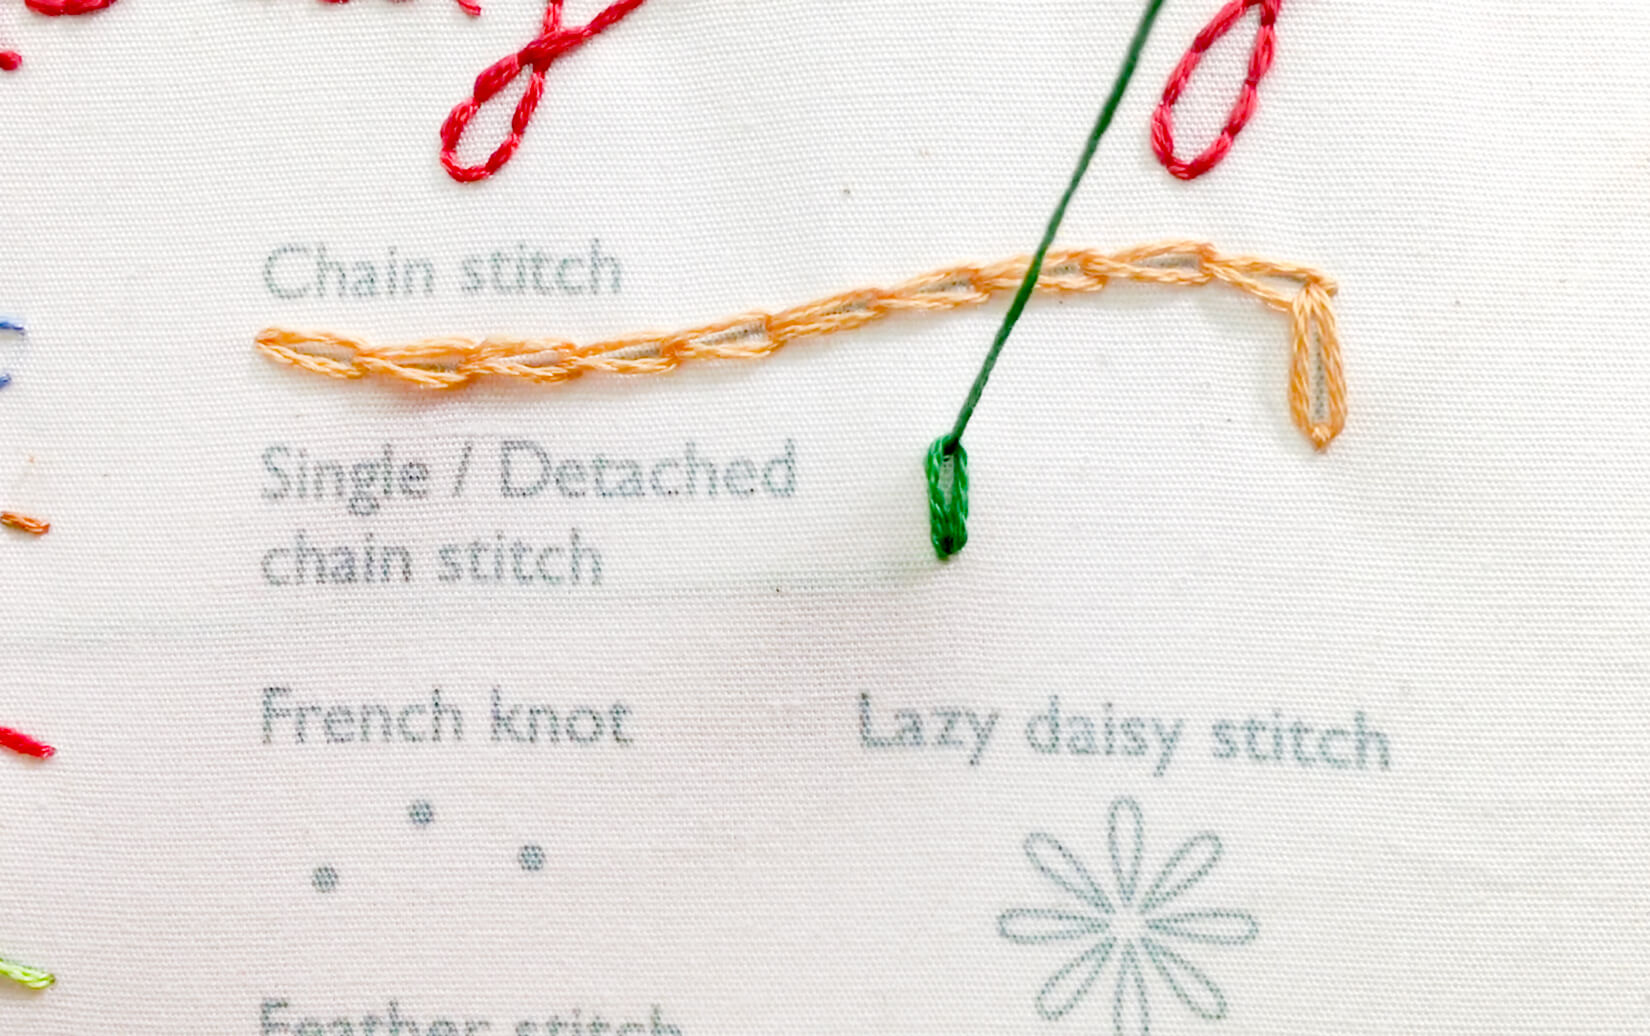 Image of stitching the single/detached chain stitch